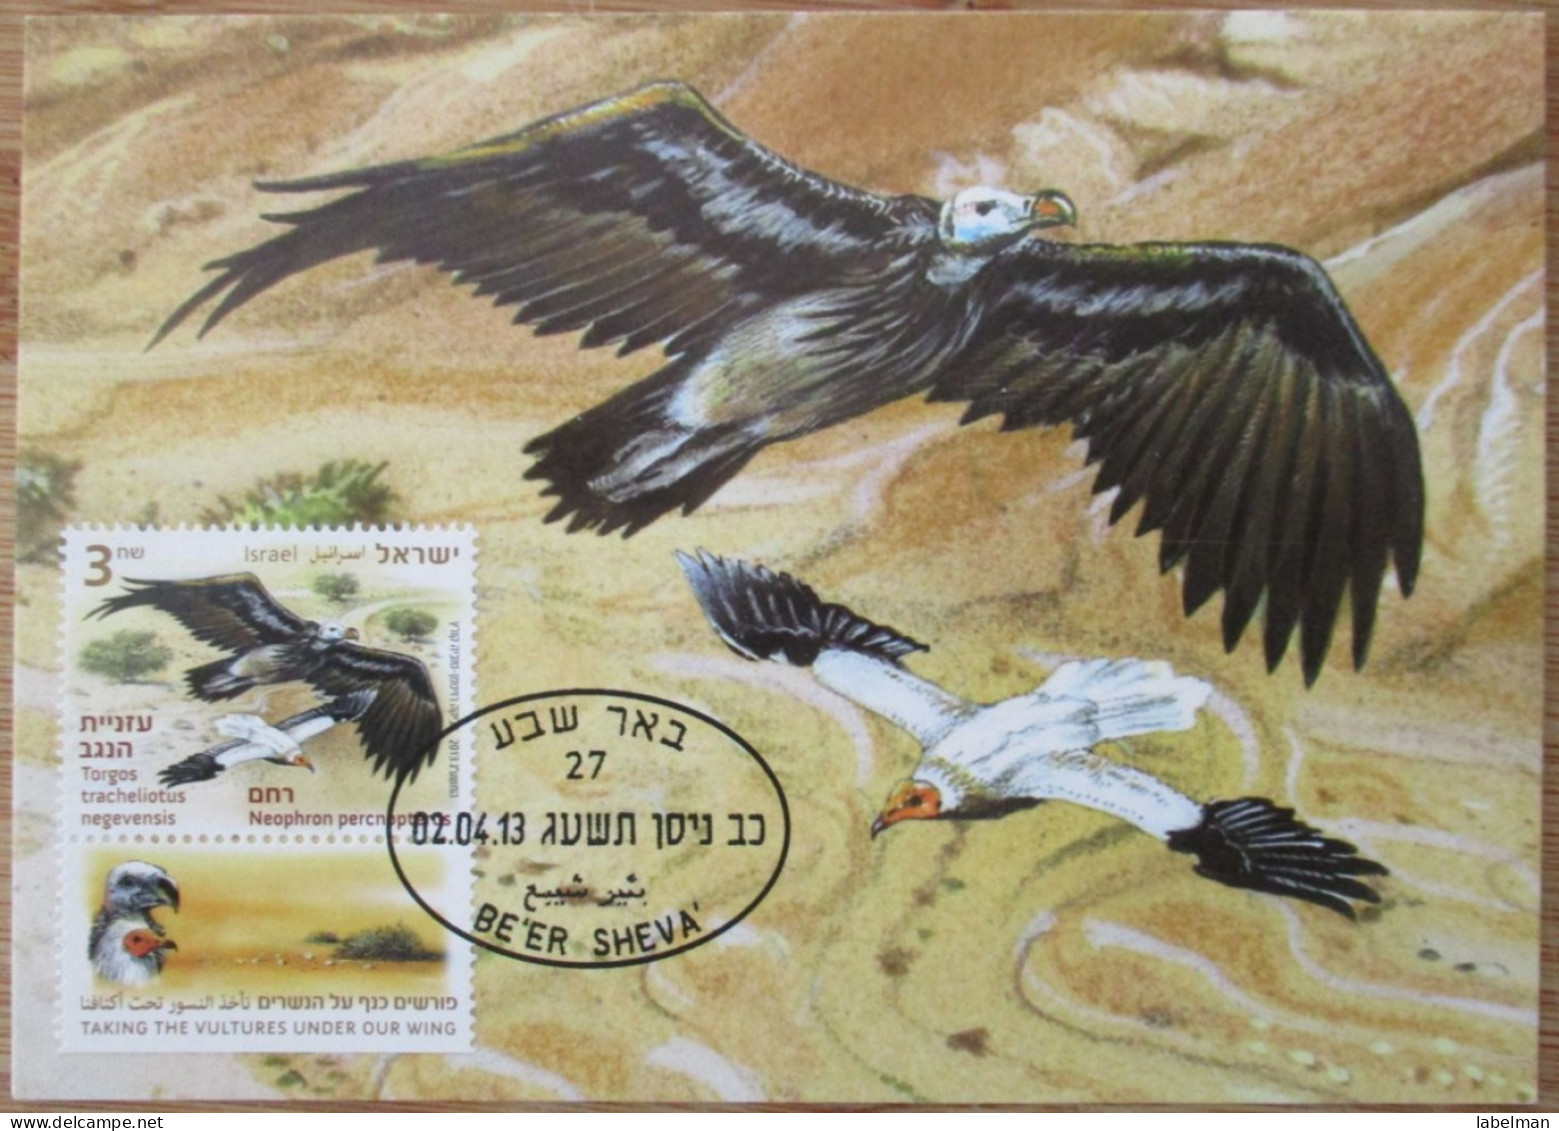 ISRAEL 2013 VULTURE GYPAETUS BARBATUS PALPHOT MAXIMUM CARD STAMP FIRST DAY OF ISSUE POSTCARD CARTE POSTALE POSTKARTE - Maximumkaarten